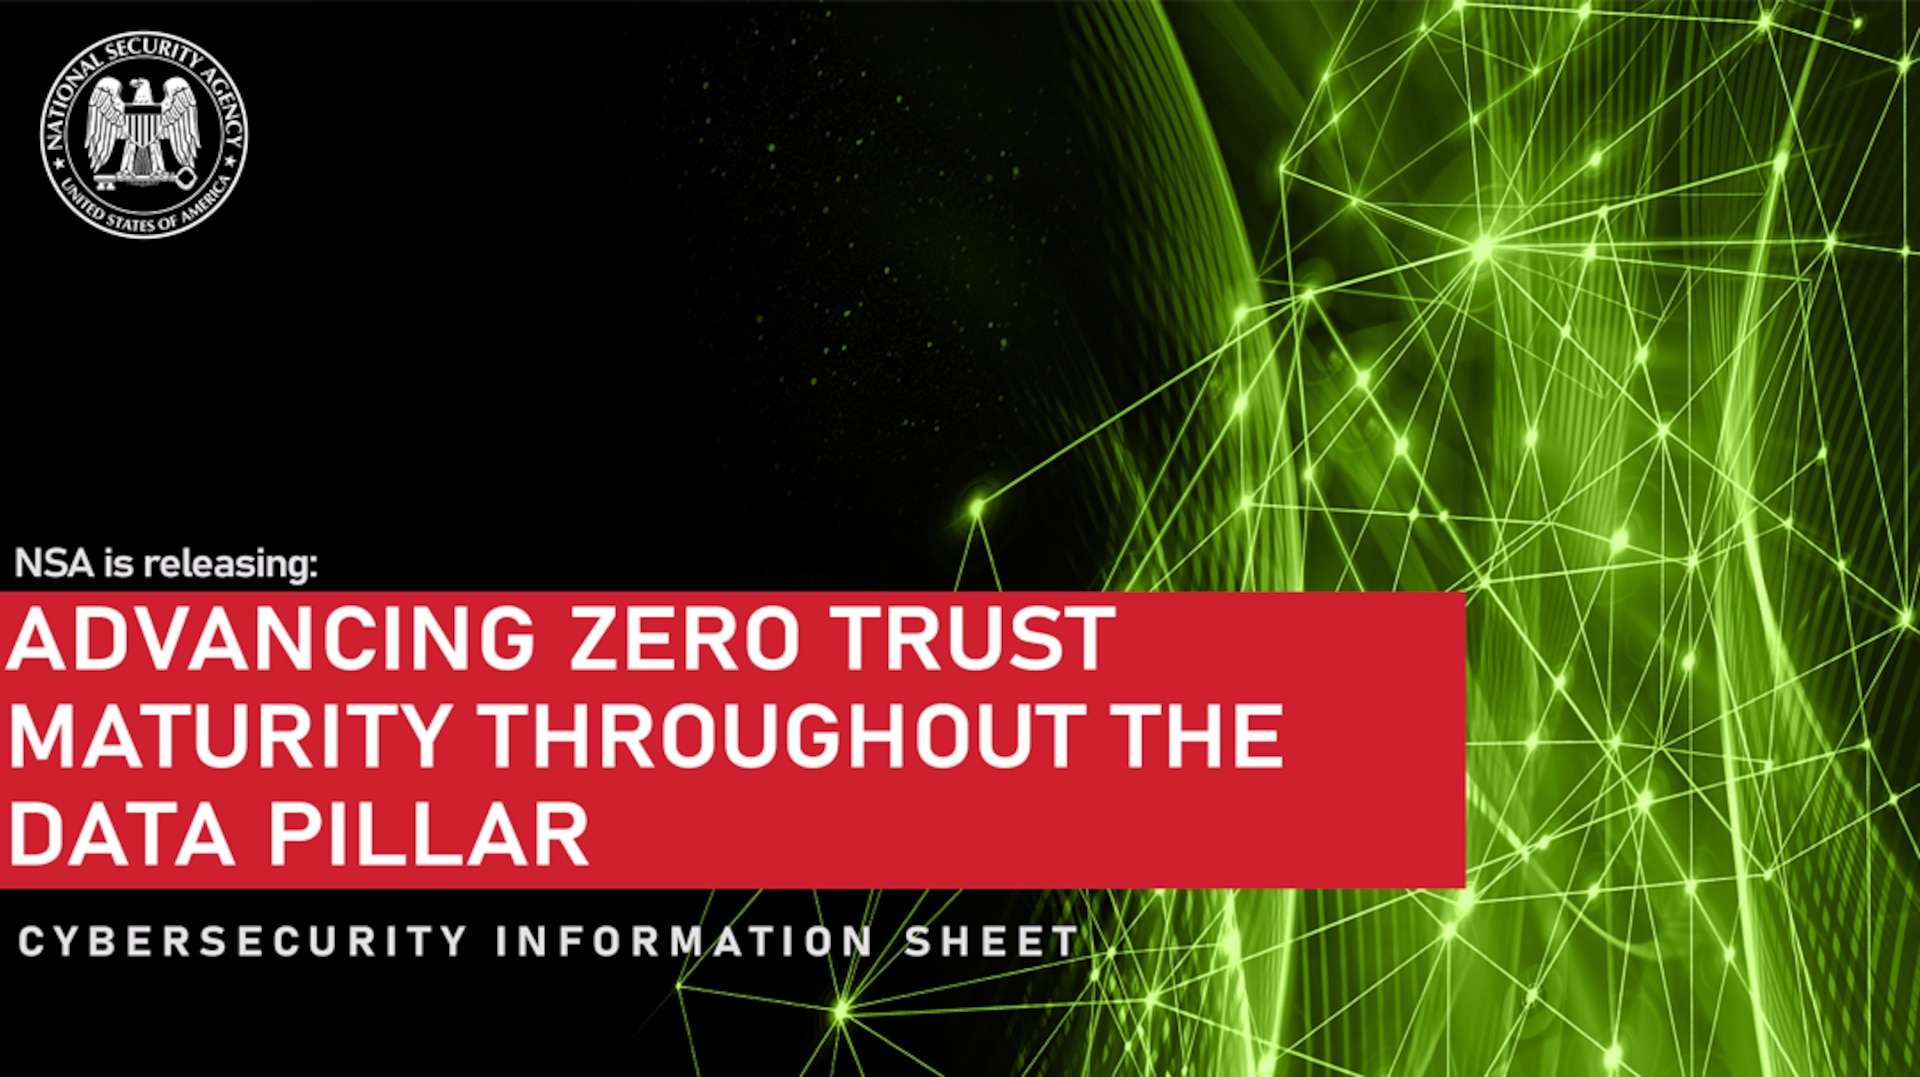 CSI: Advancing Zero Trust Maturity Throughout the Data Pillar